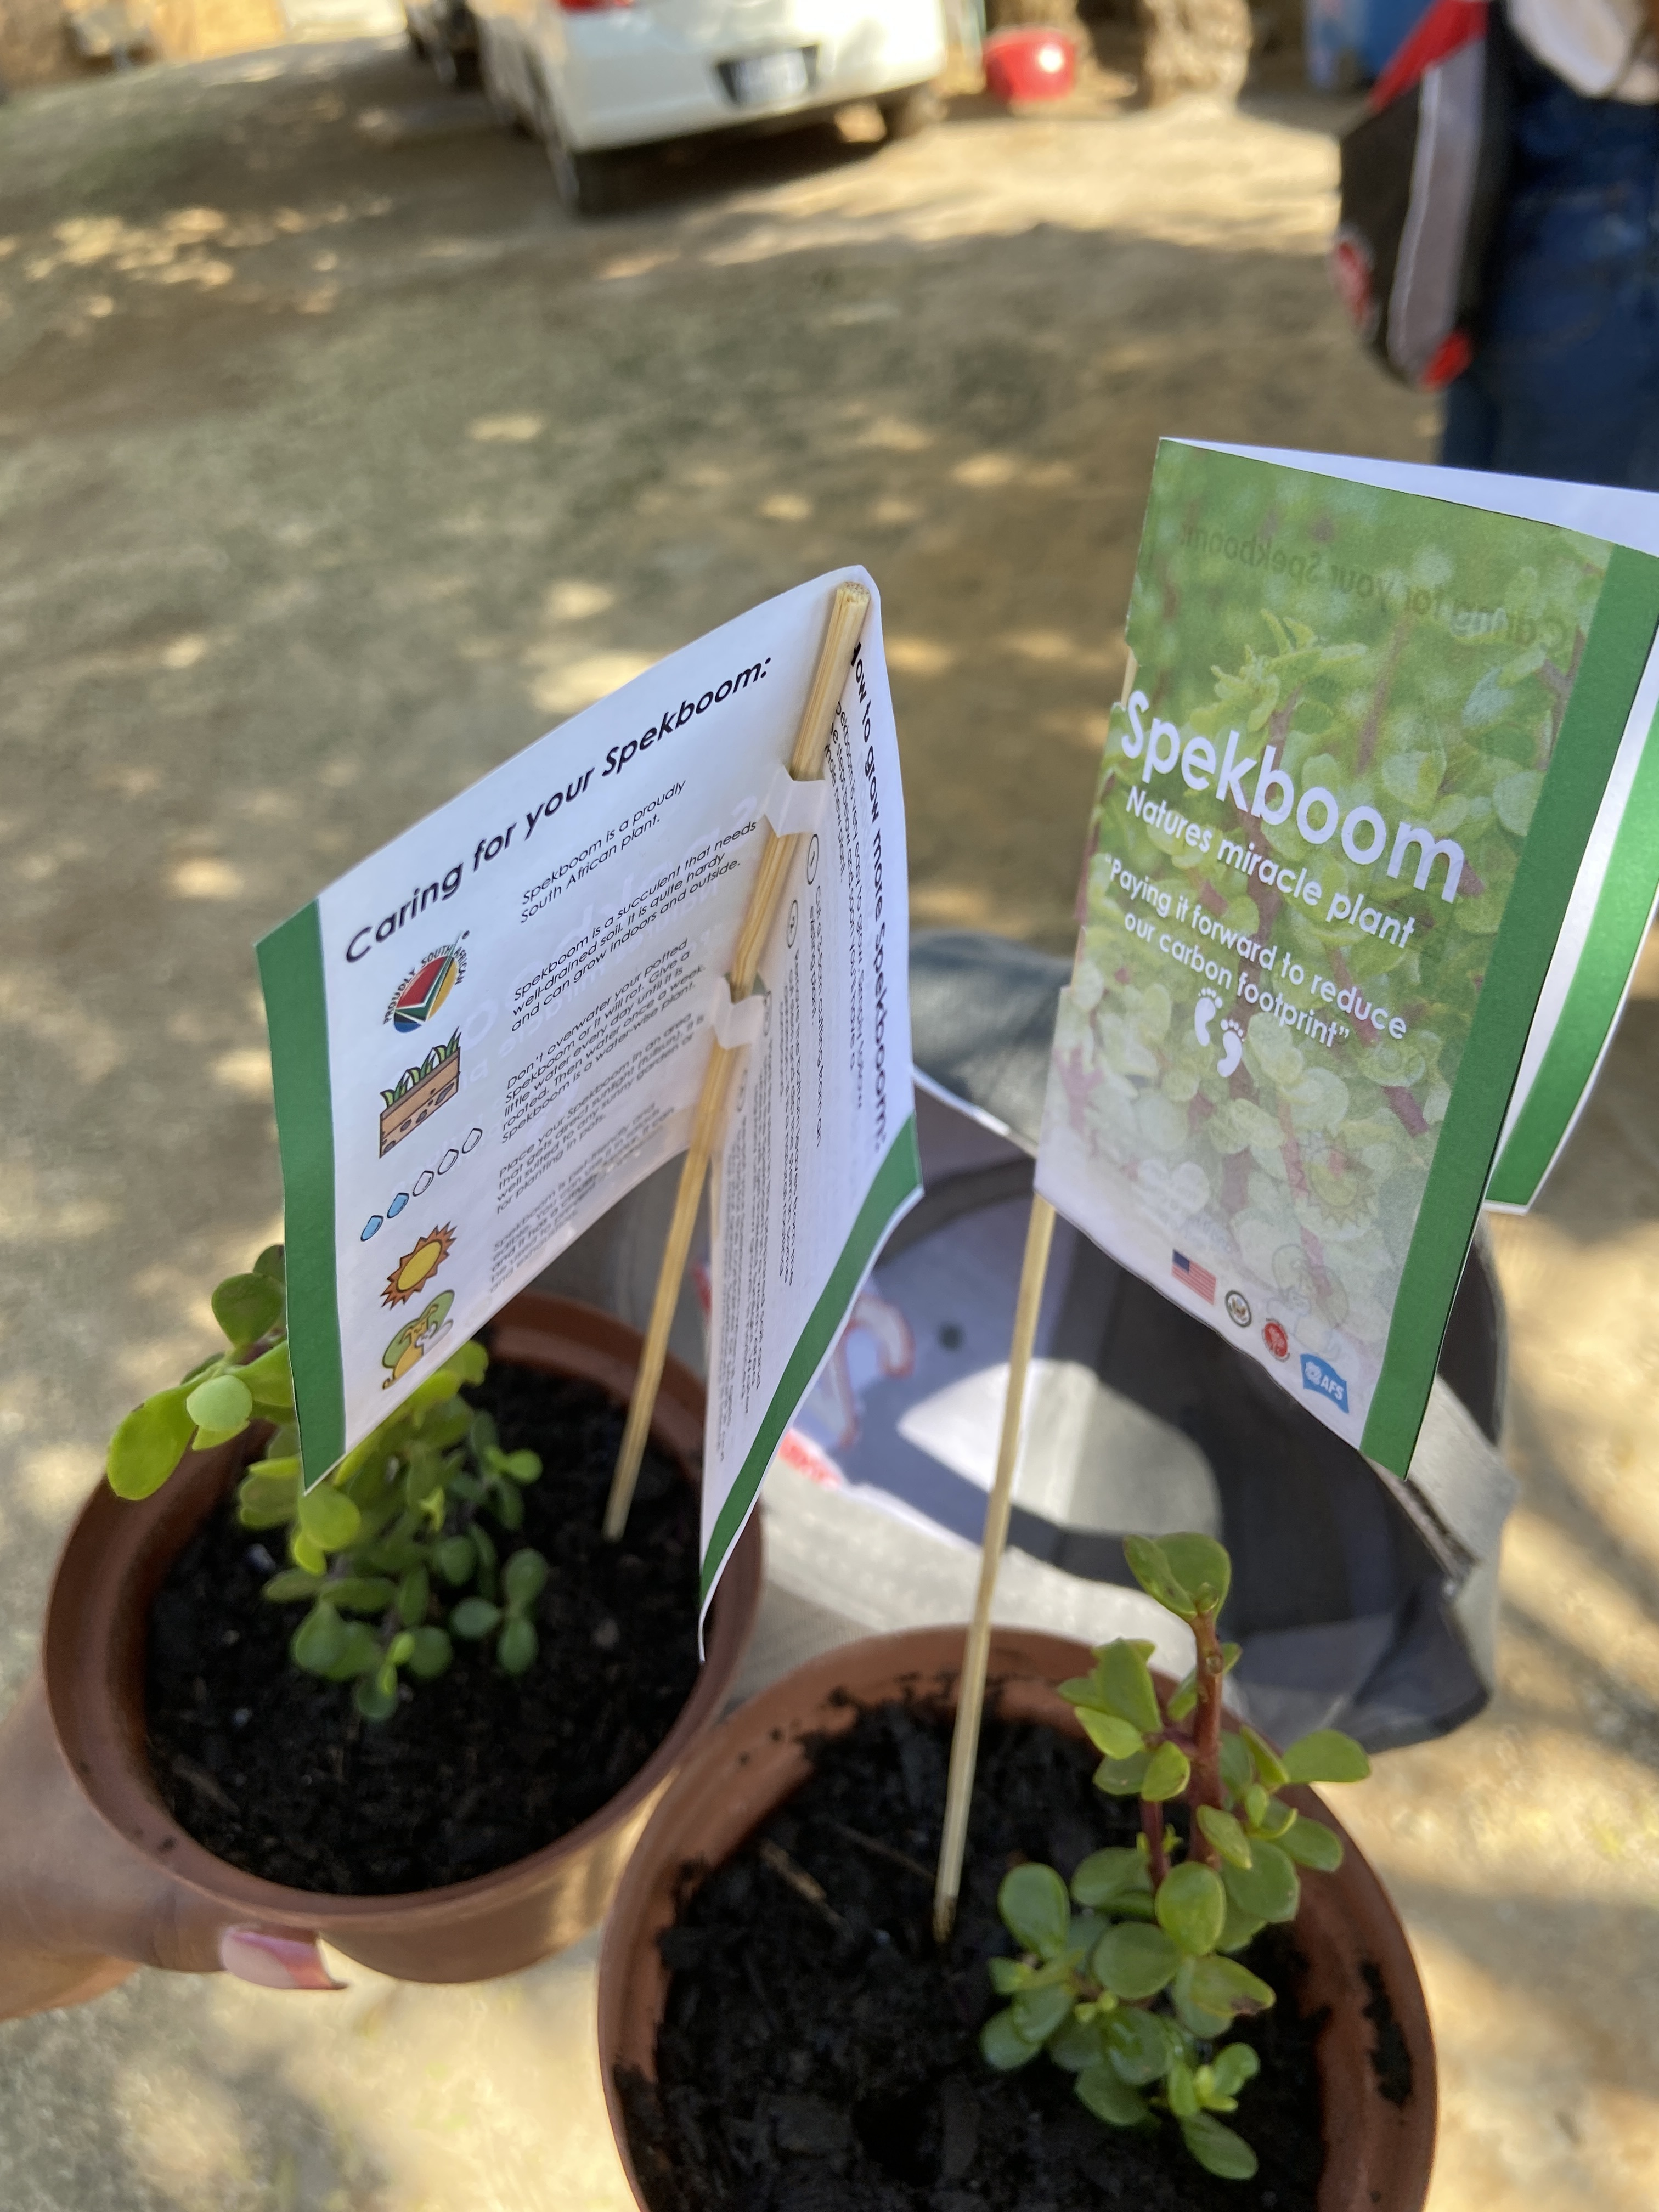 Spekboom plants with informative flyers